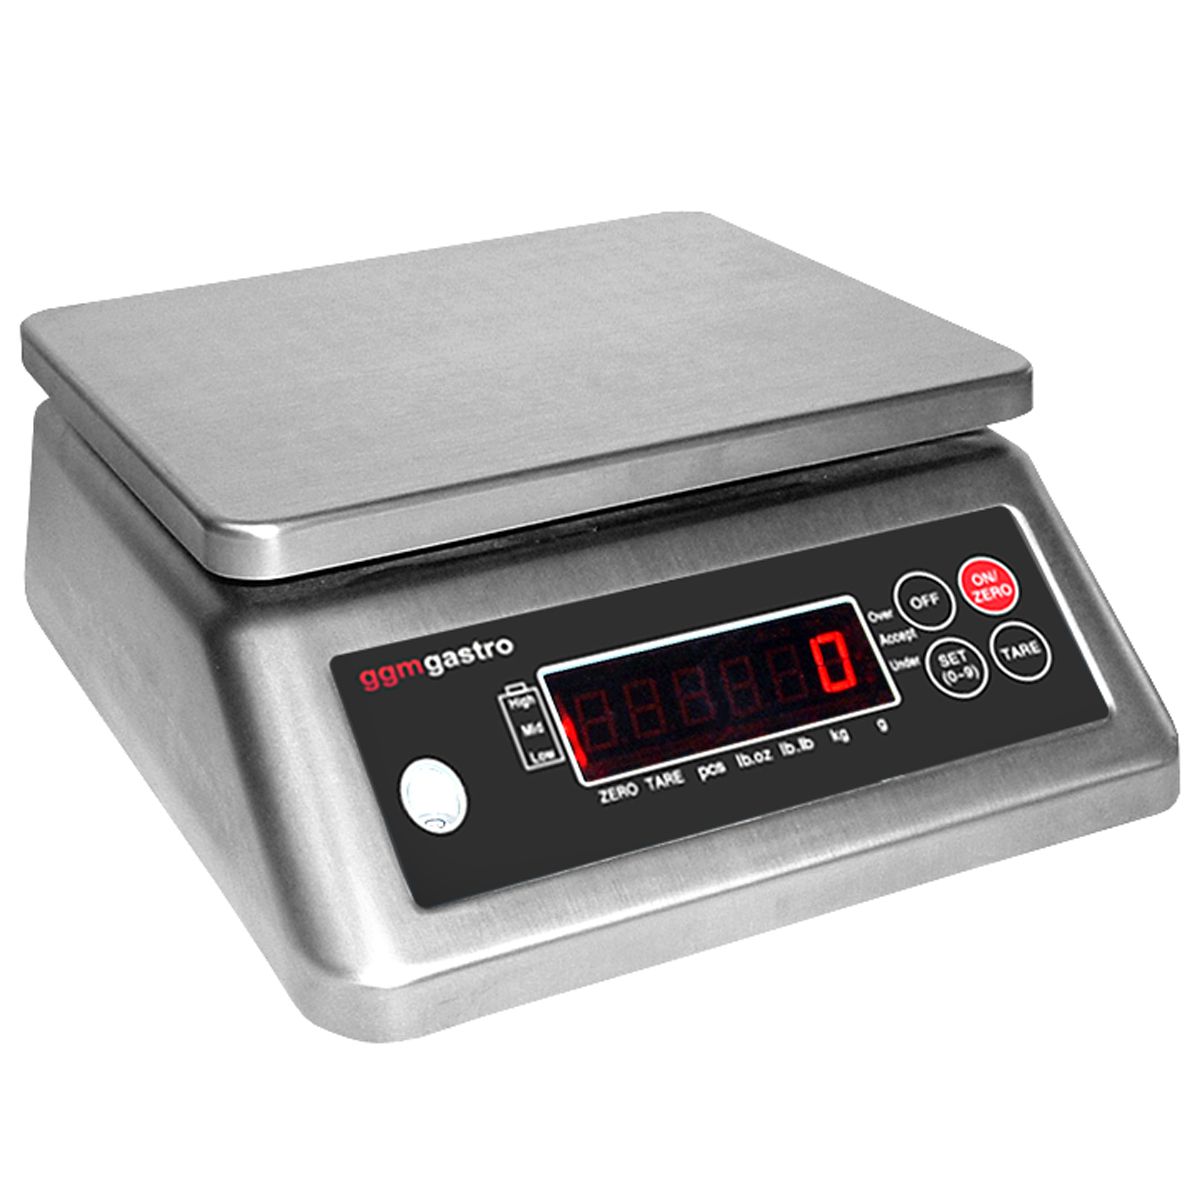 Bilancia da cucina digitale fino a 6 kg - Graduazione: 0,5 grammi